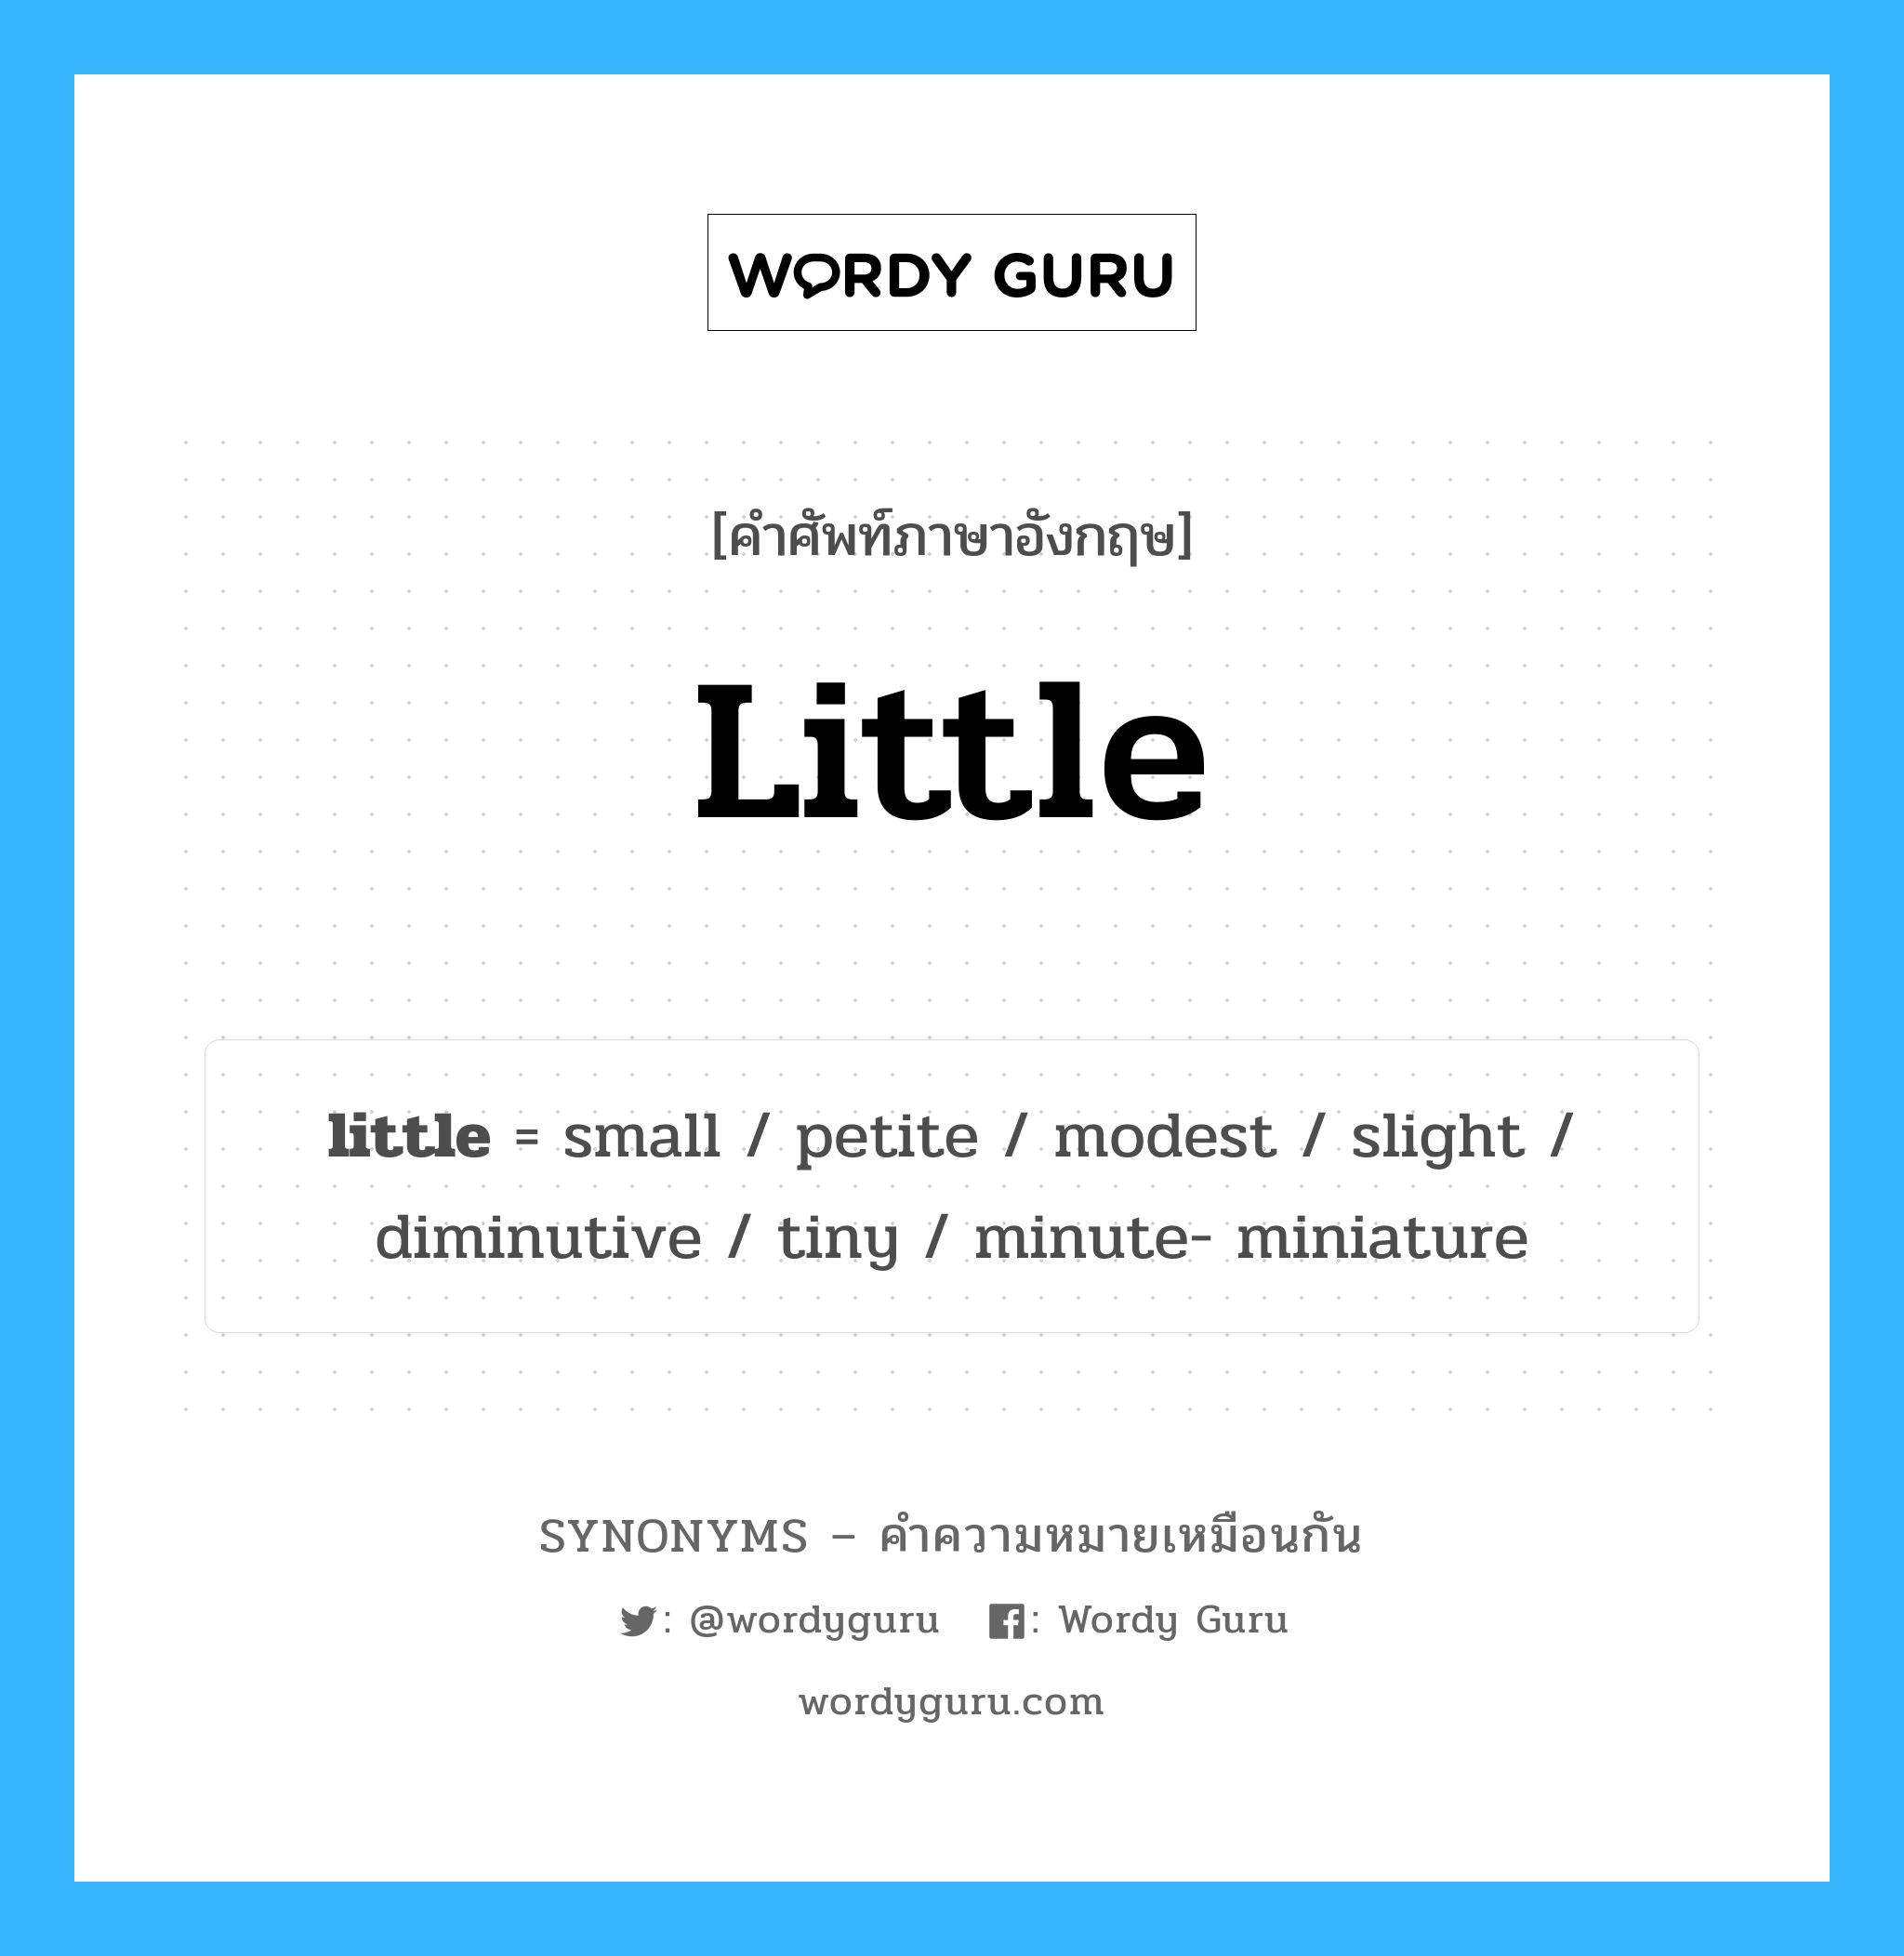 minute- miniature เป็นหนึ่งใน little และมีคำอื่น ๆ อีกดังนี้, คำศัพท์ภาษาอังกฤษ minute- miniature ความหมายคล้ายกันกับ little แปลว่า นาทีขนาดเล็ก หมวด little